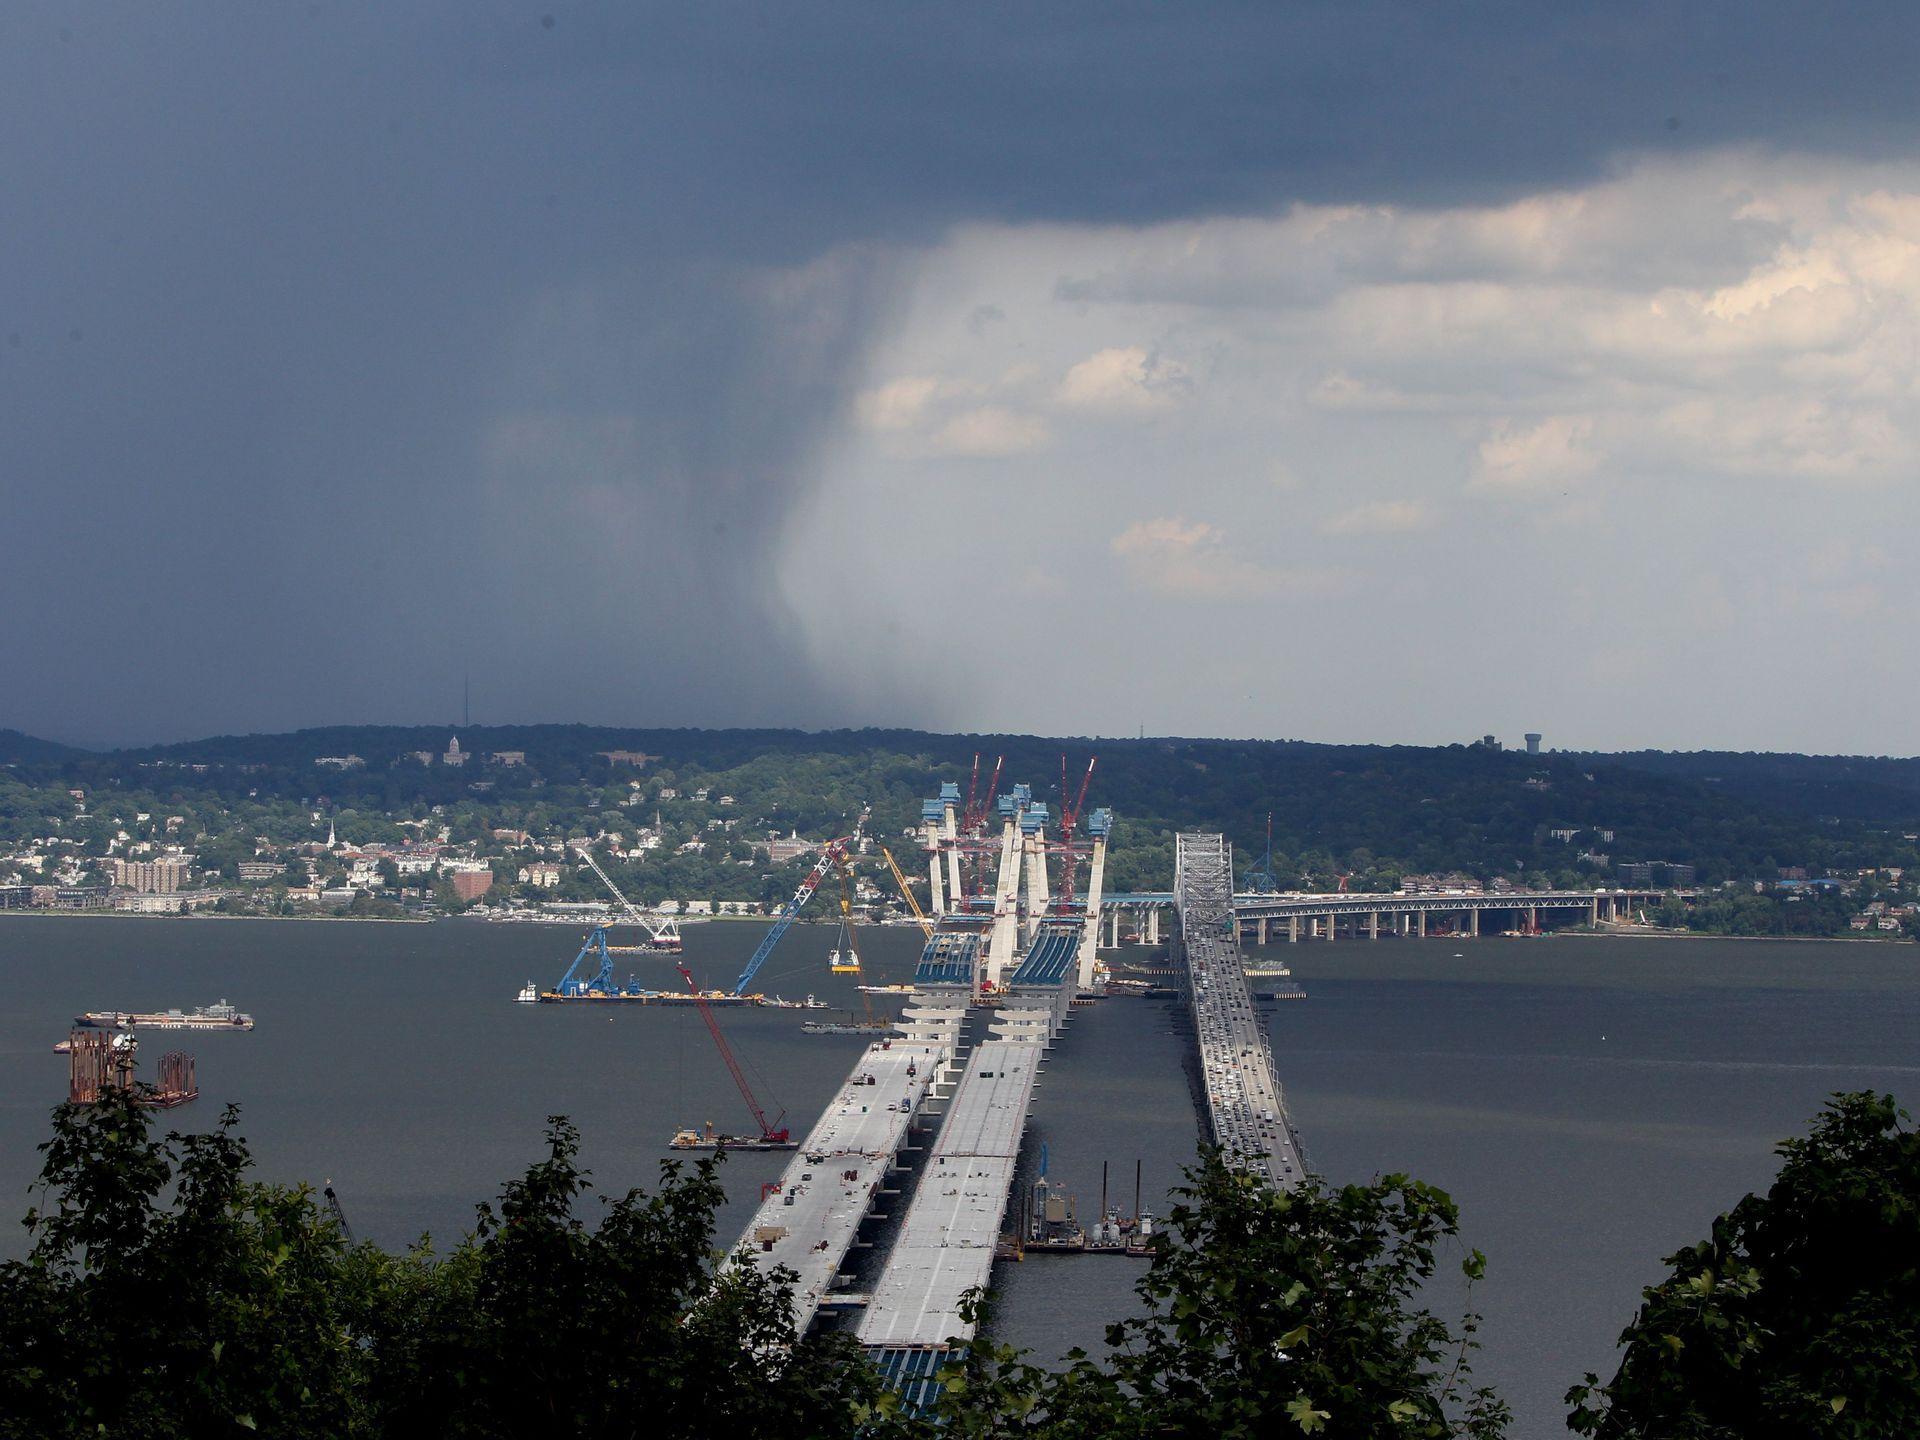 Rain clouds move across the Hudson near the Tappan Zee Bridge